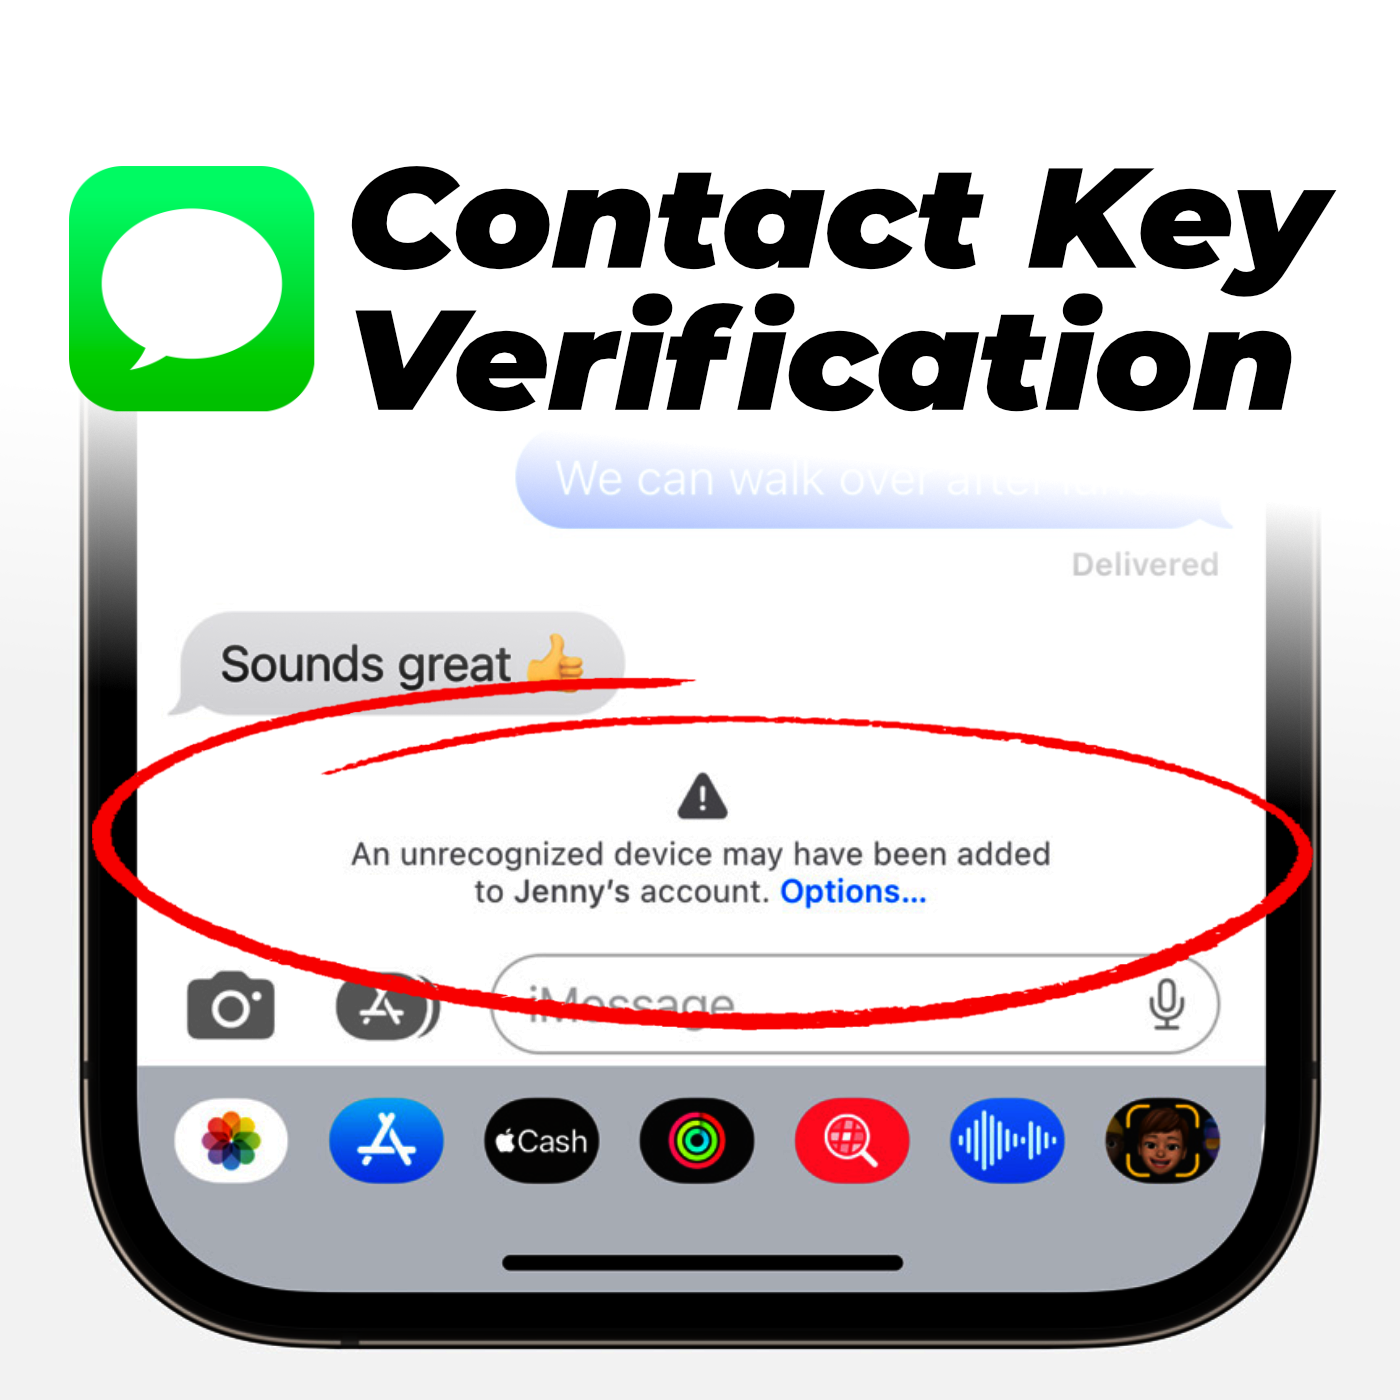 Jonah Aragon Explains Contact Key Verification in New Video